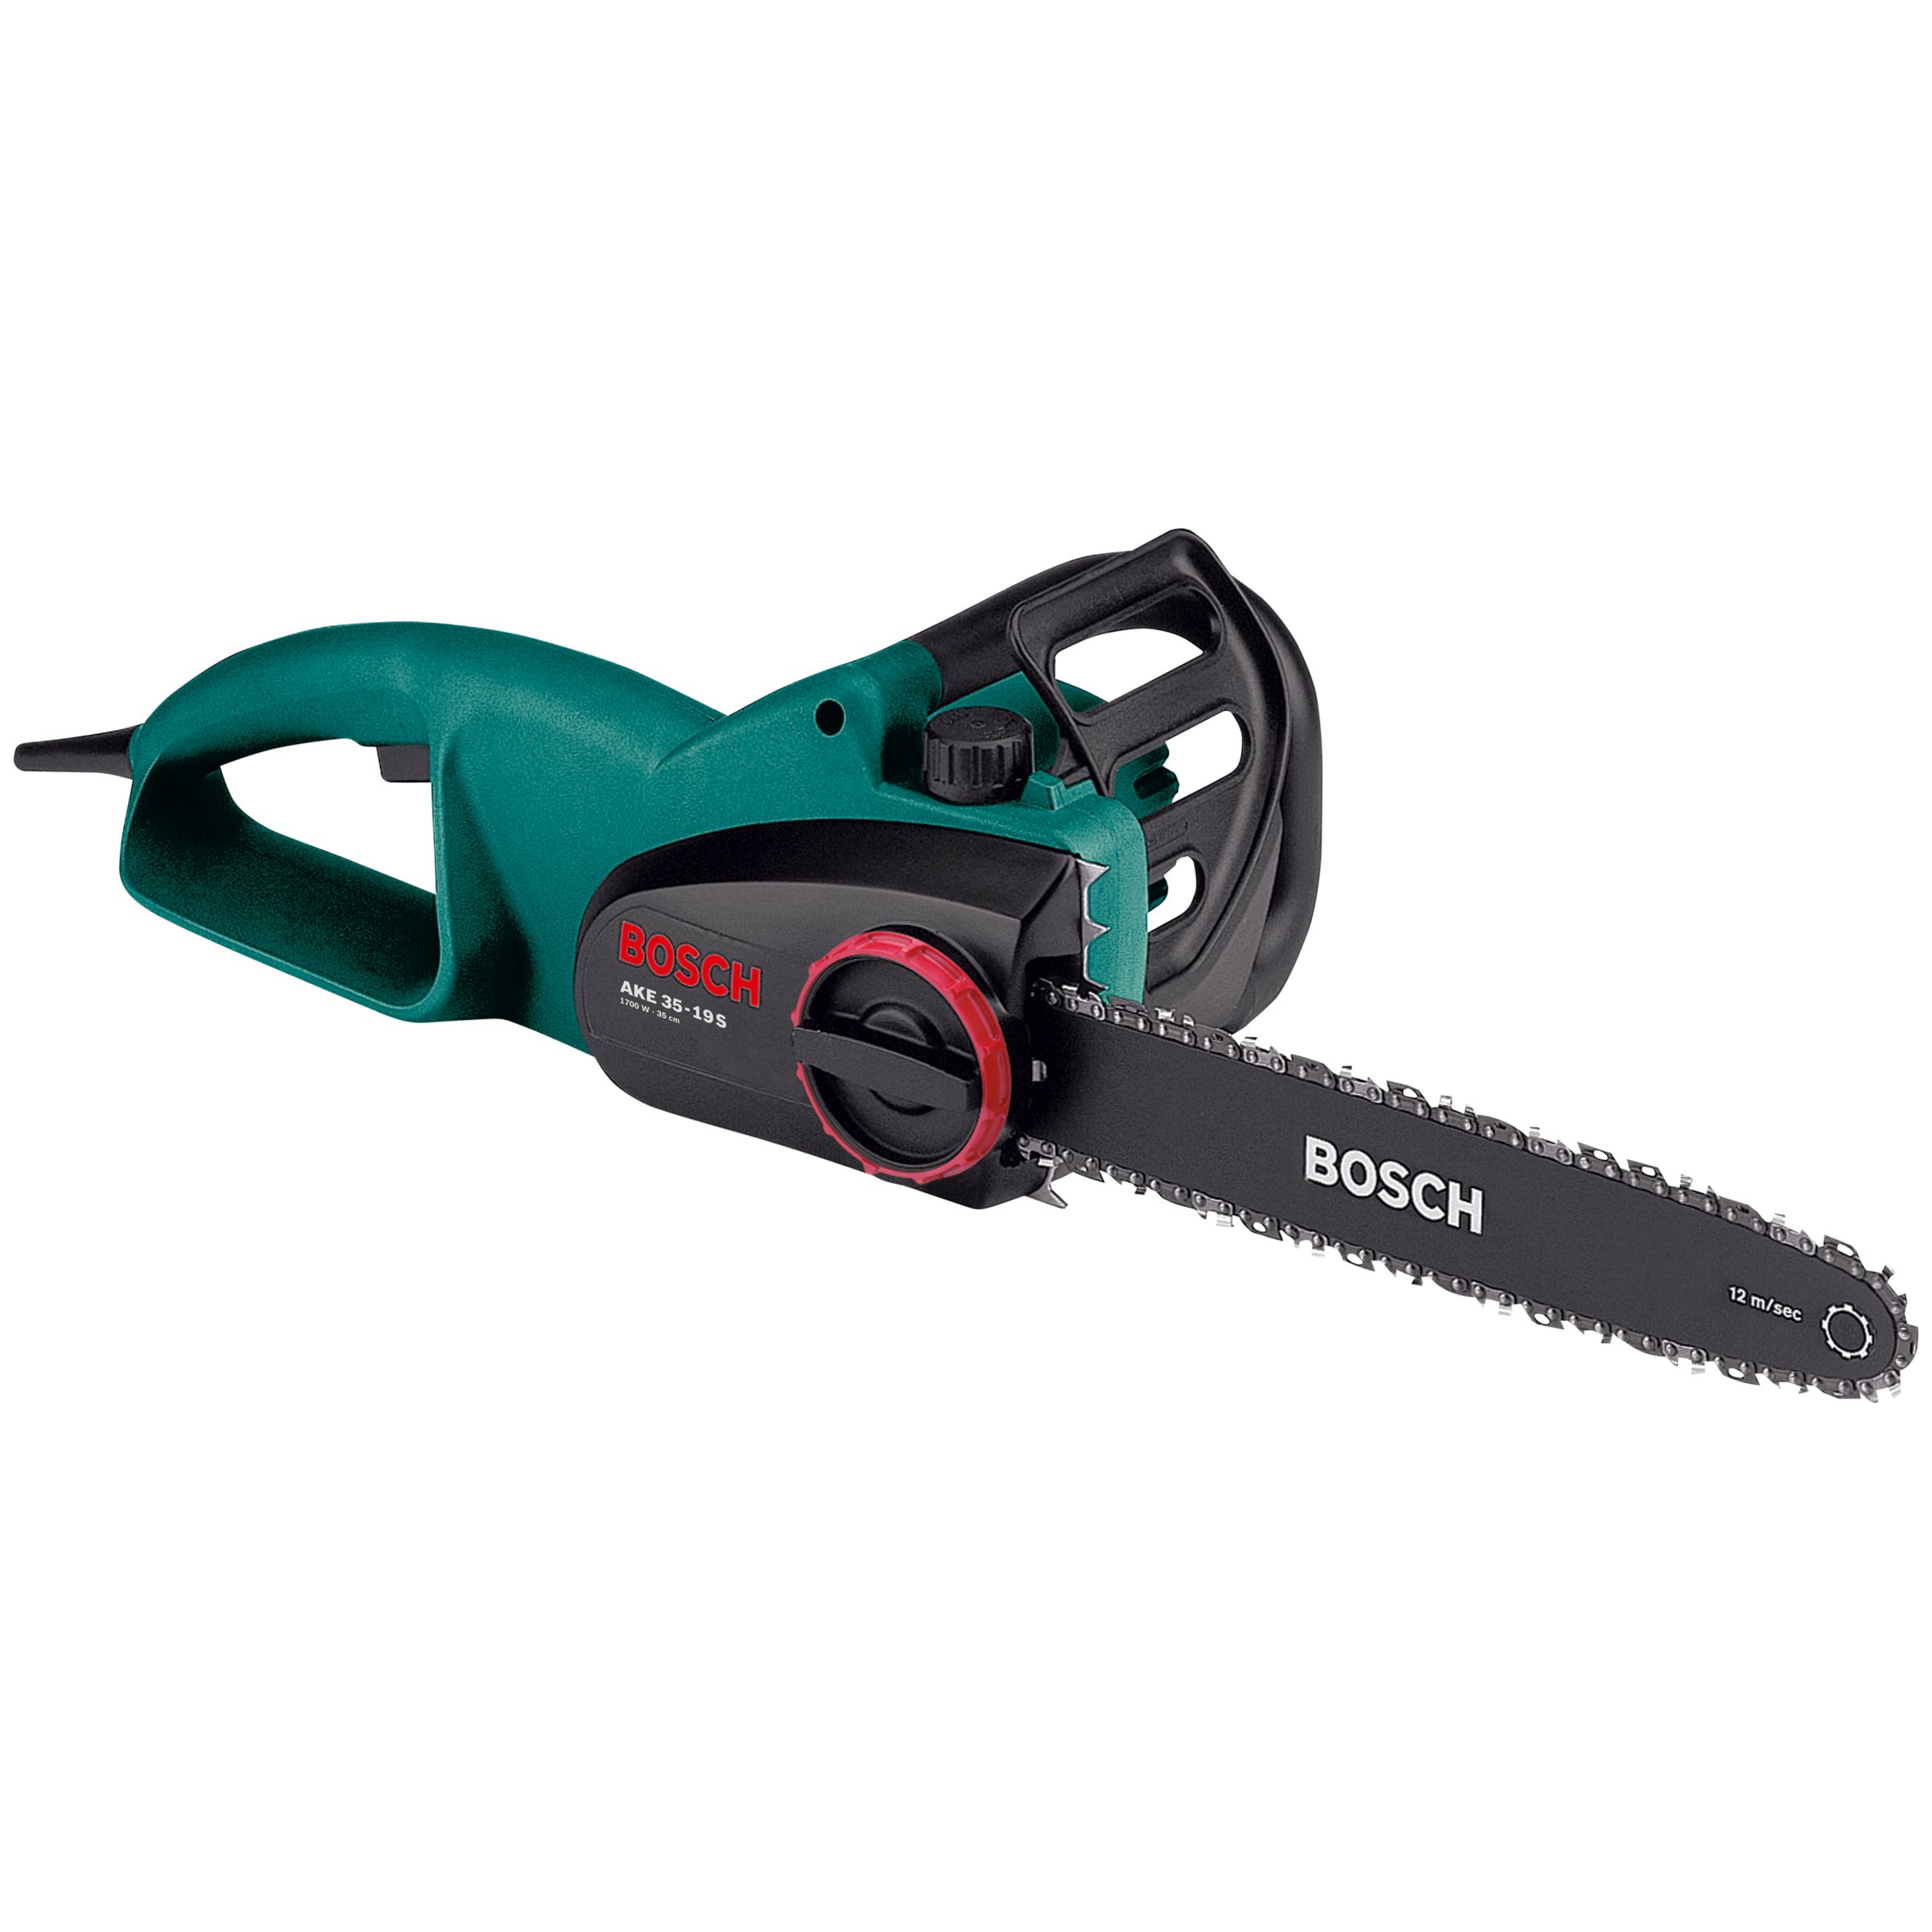 Bosch AKE 35-19S Electric Chainsaw